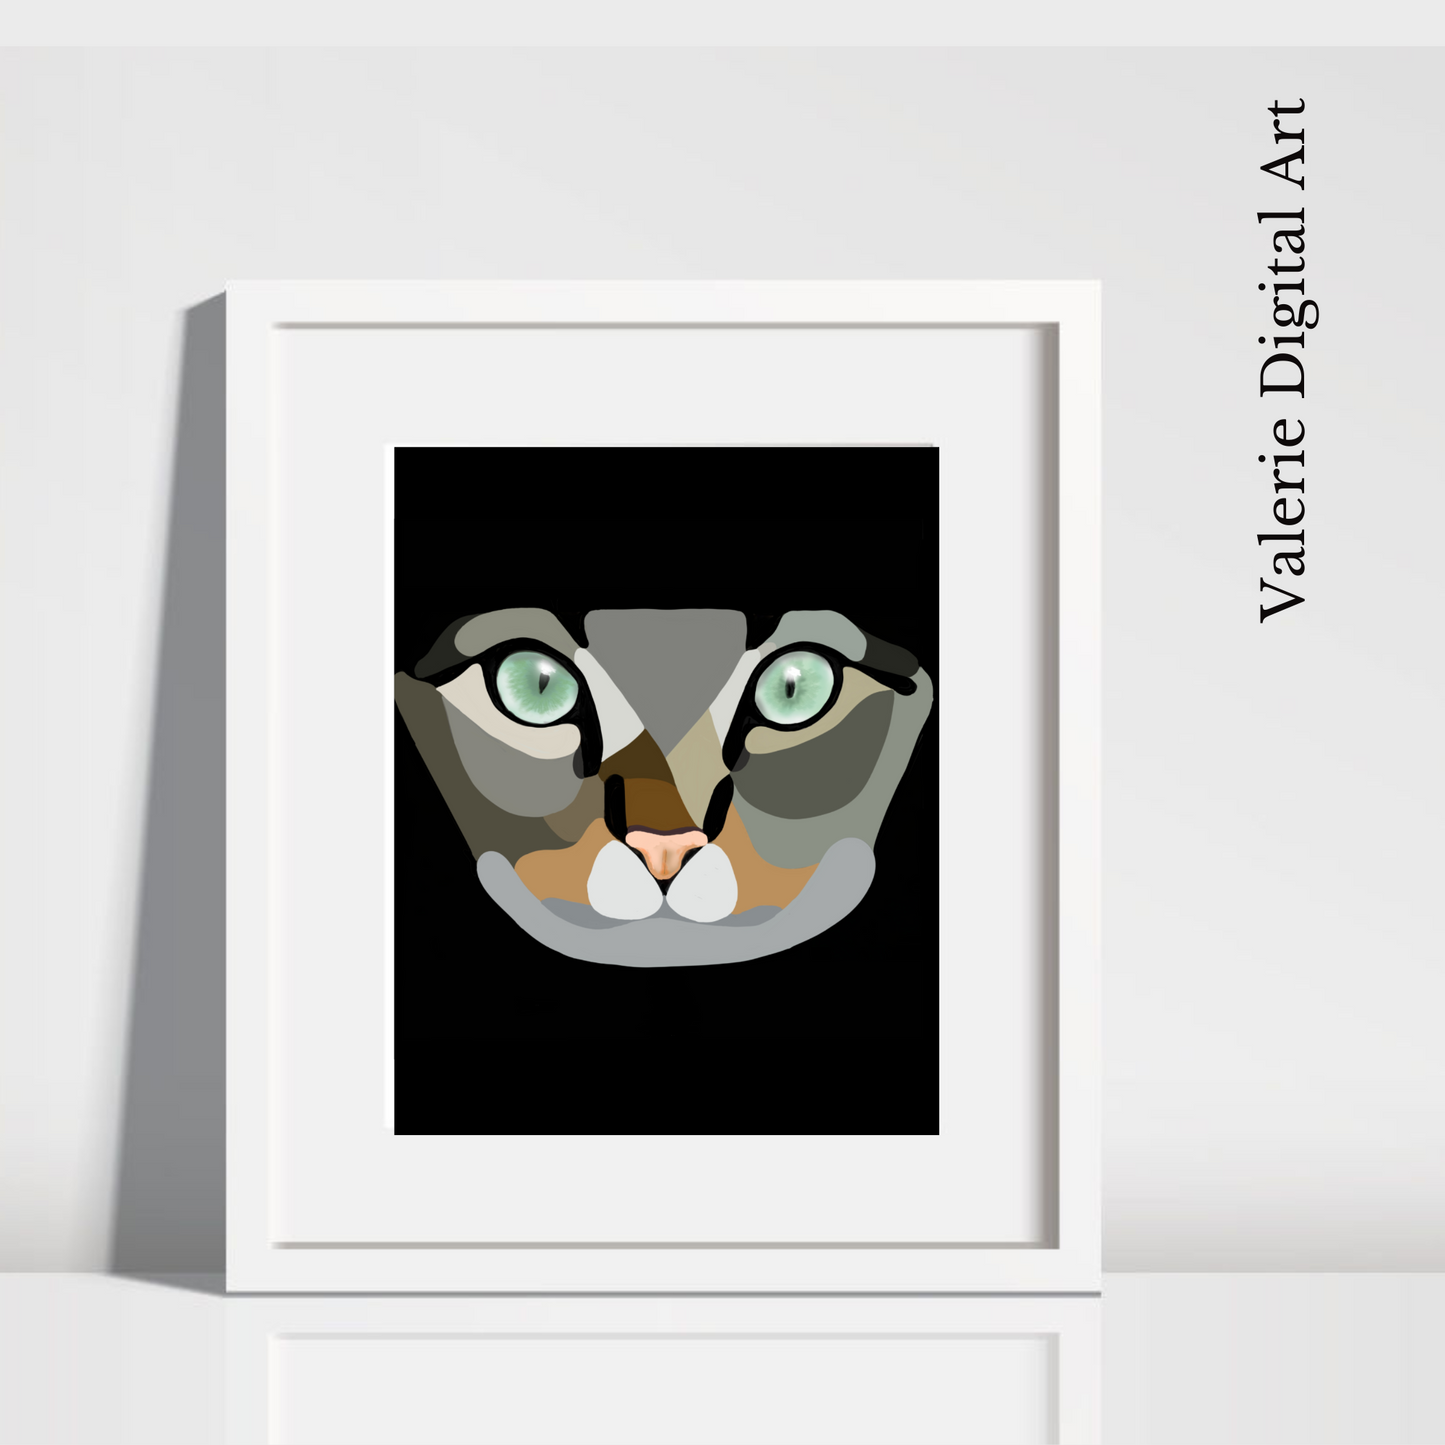 Micci my cat canvas Rolled Canvas - valerie-digital-art